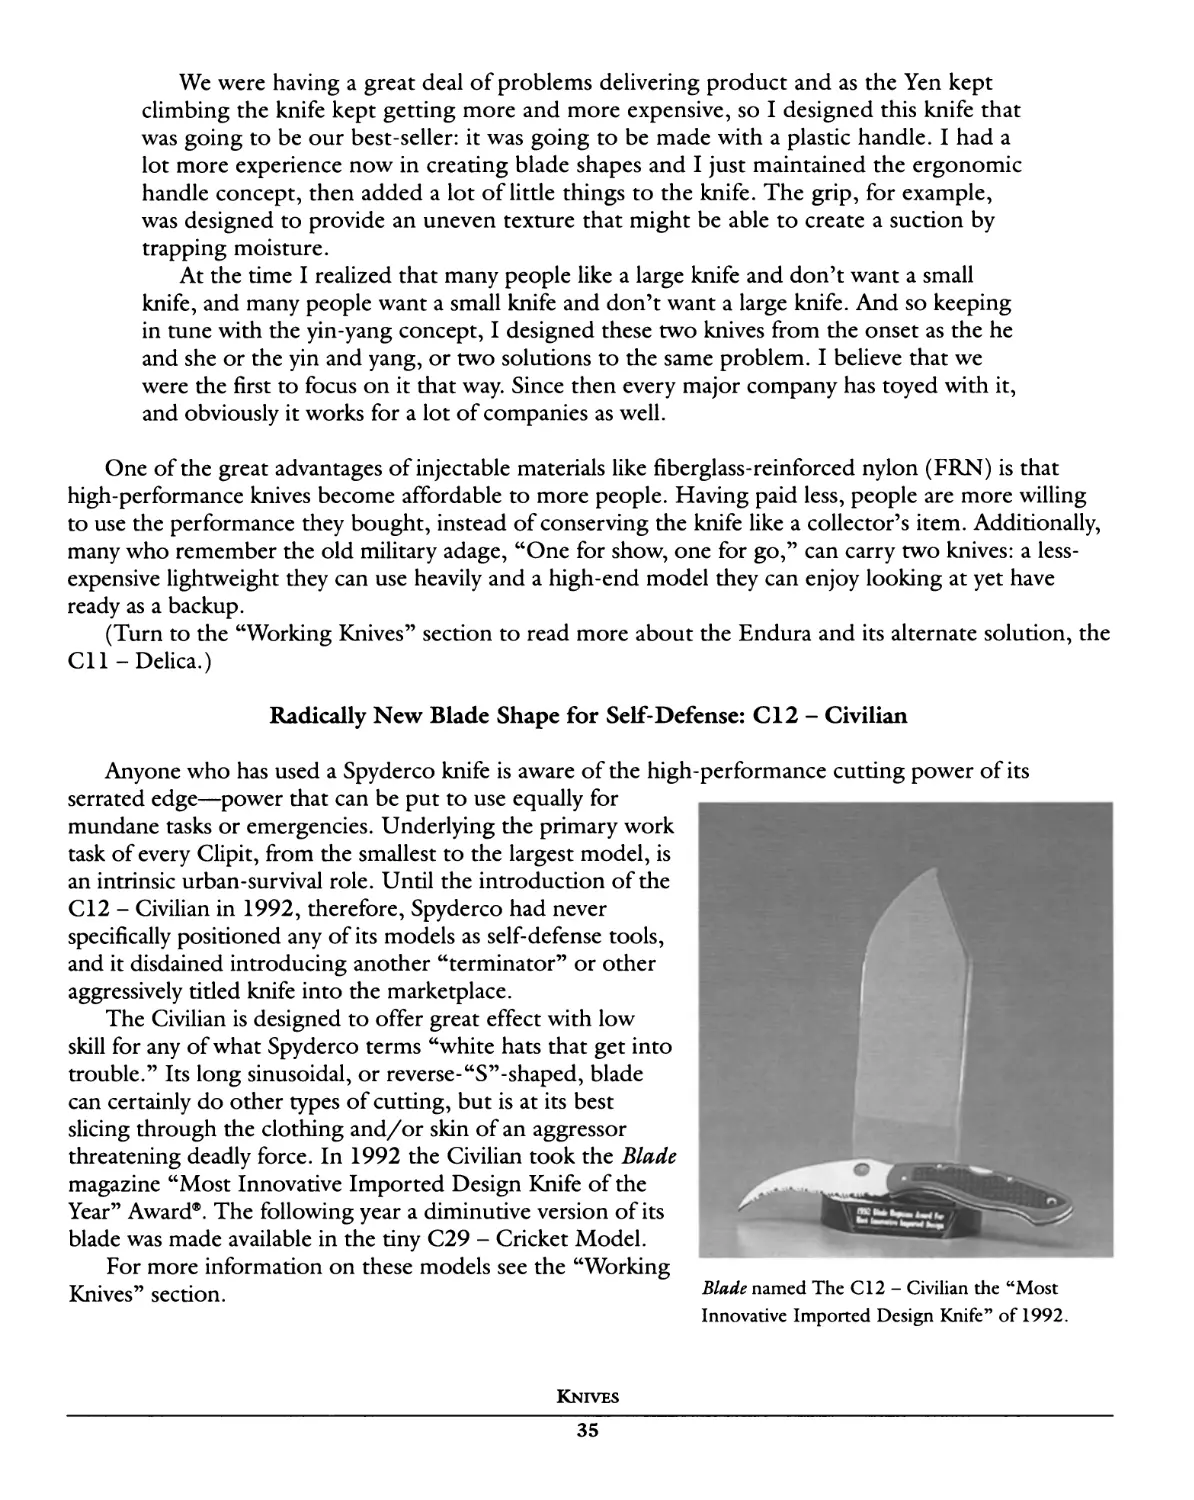 Radically New Blade Shape for Self-Defense: C12 - Civilian